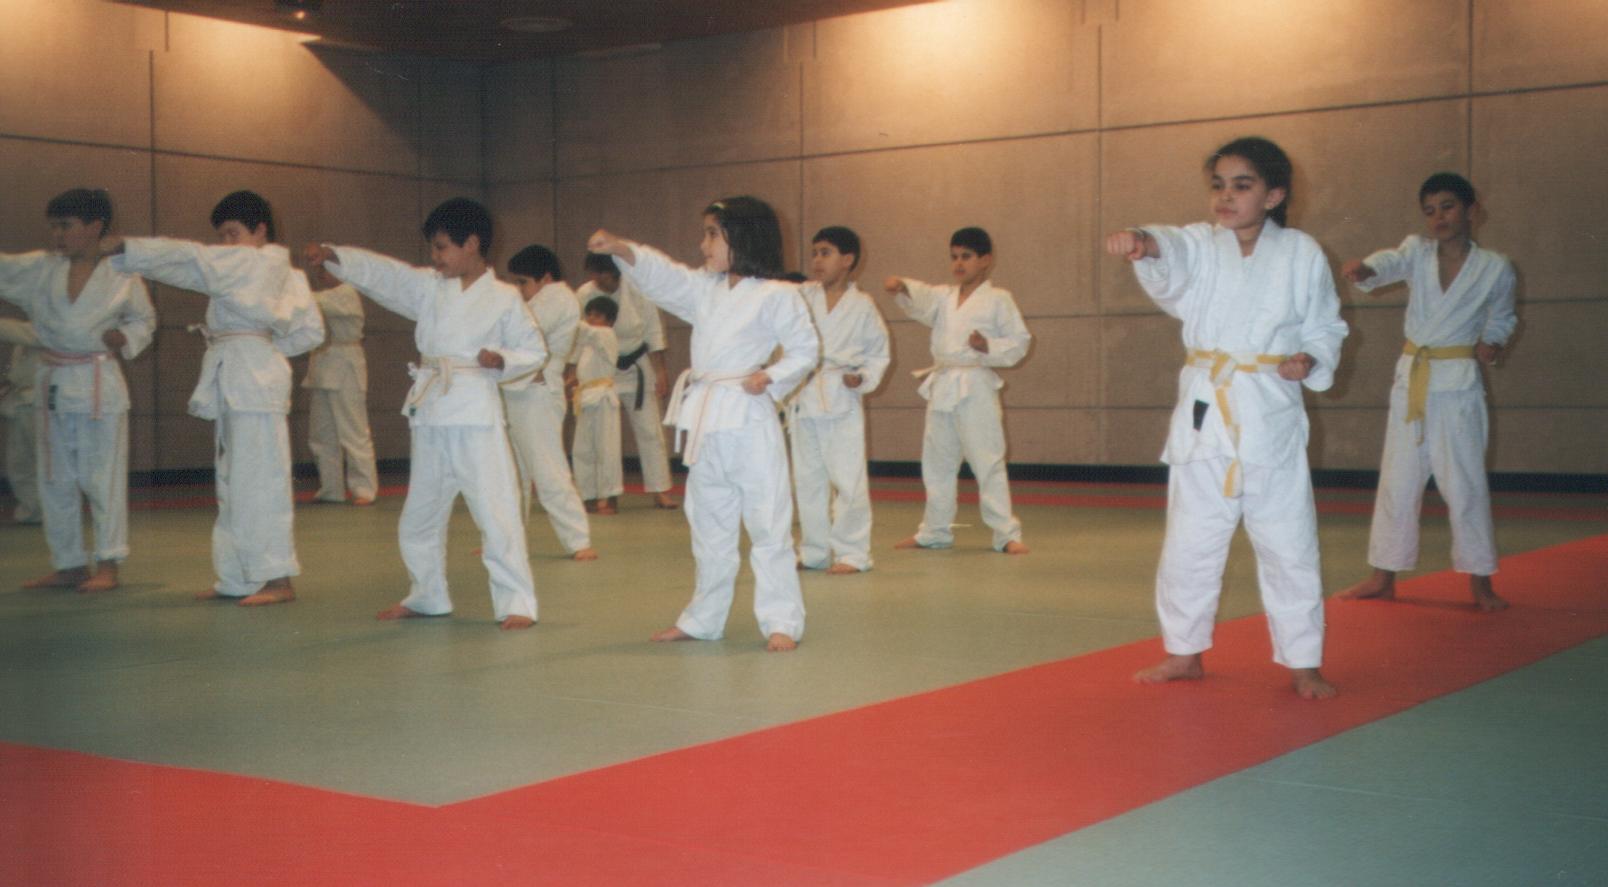 club karate 75019